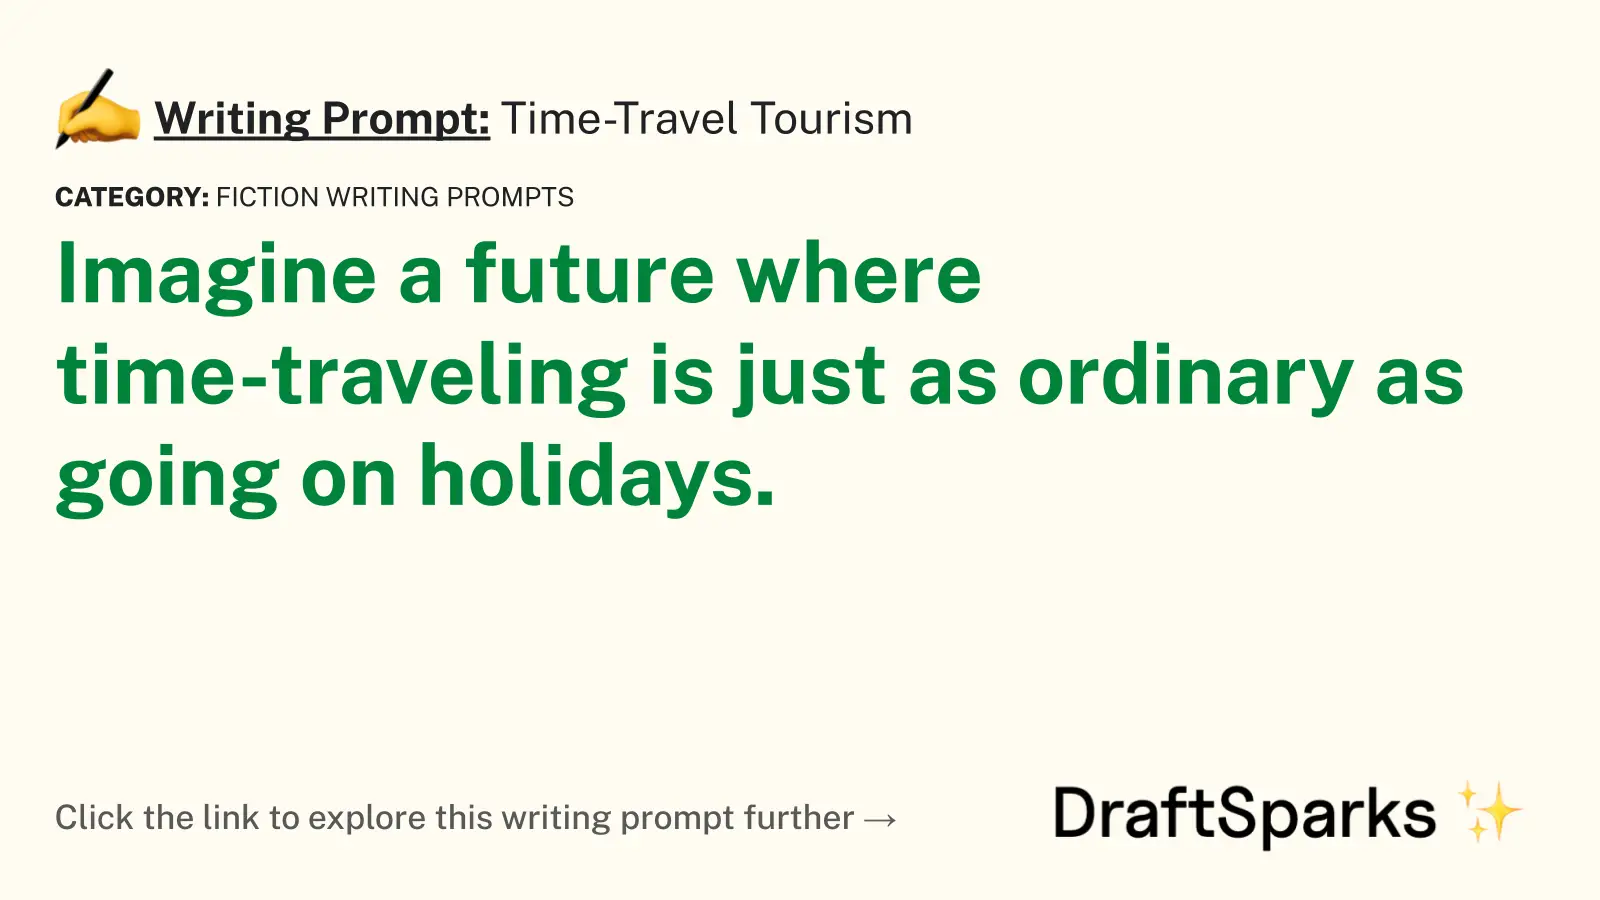 Time-Travel Tourism